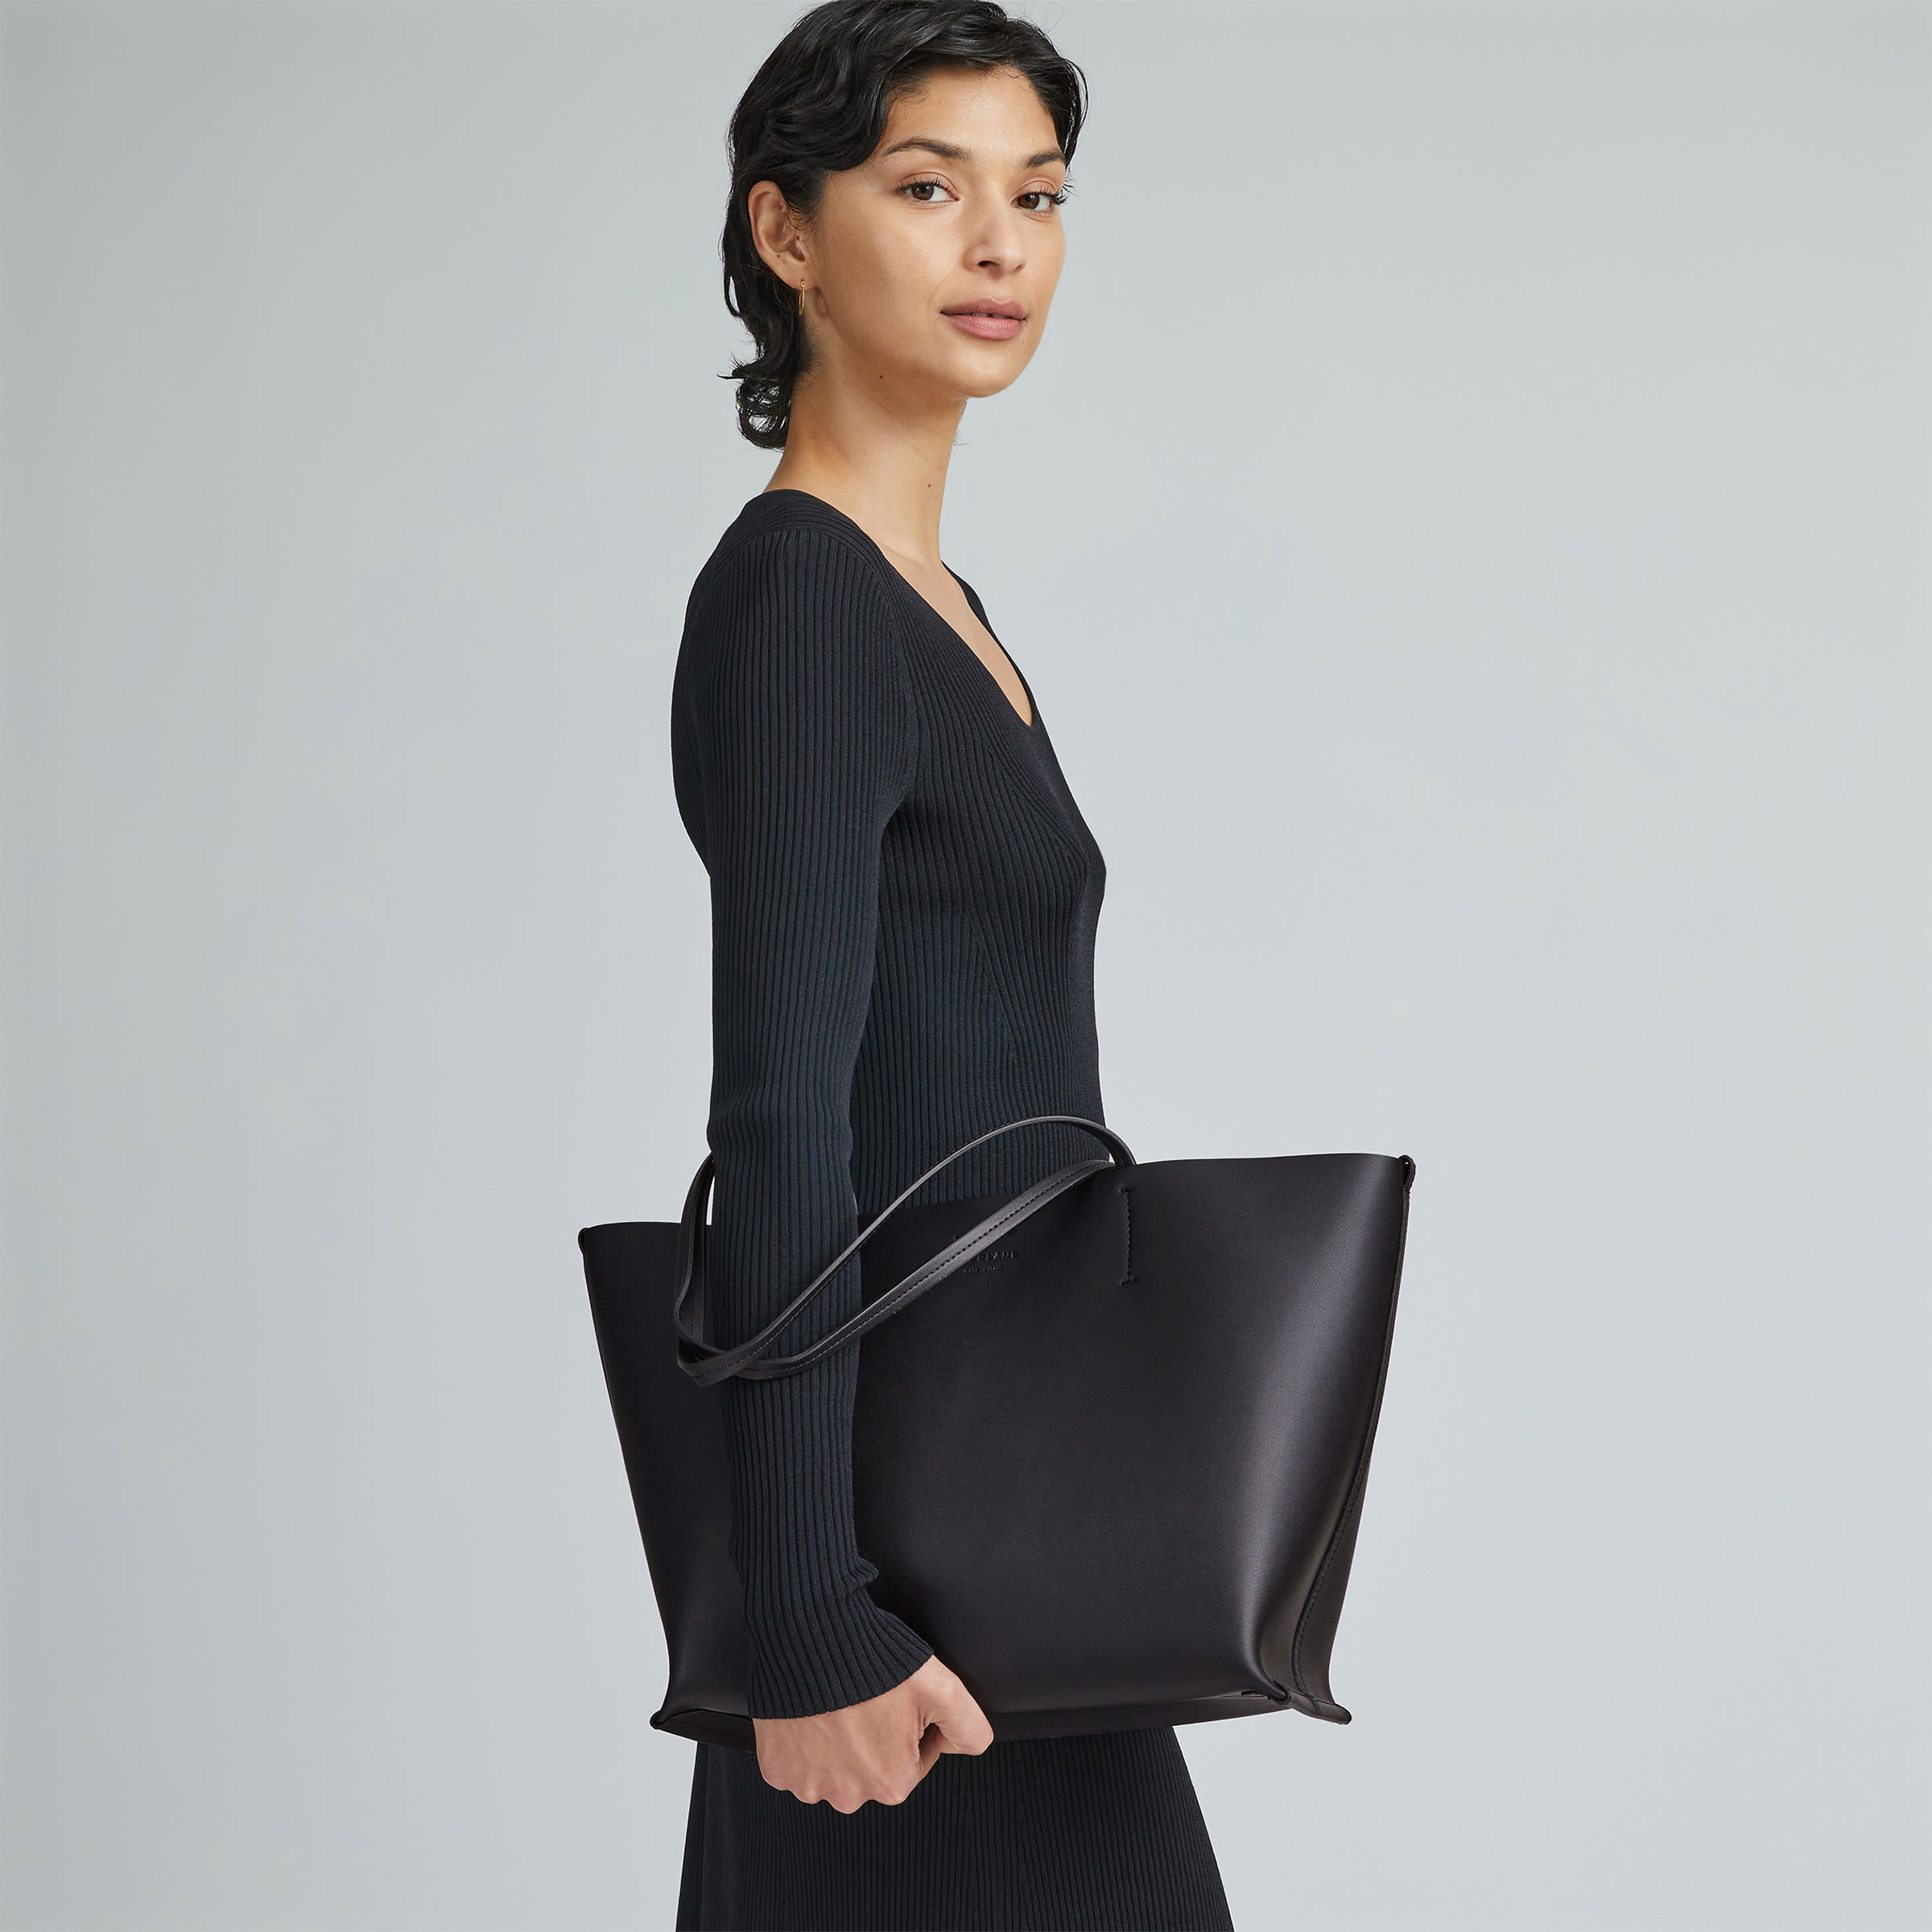 Moda Luxe Brixley Medium Tote Bag - Natural Black